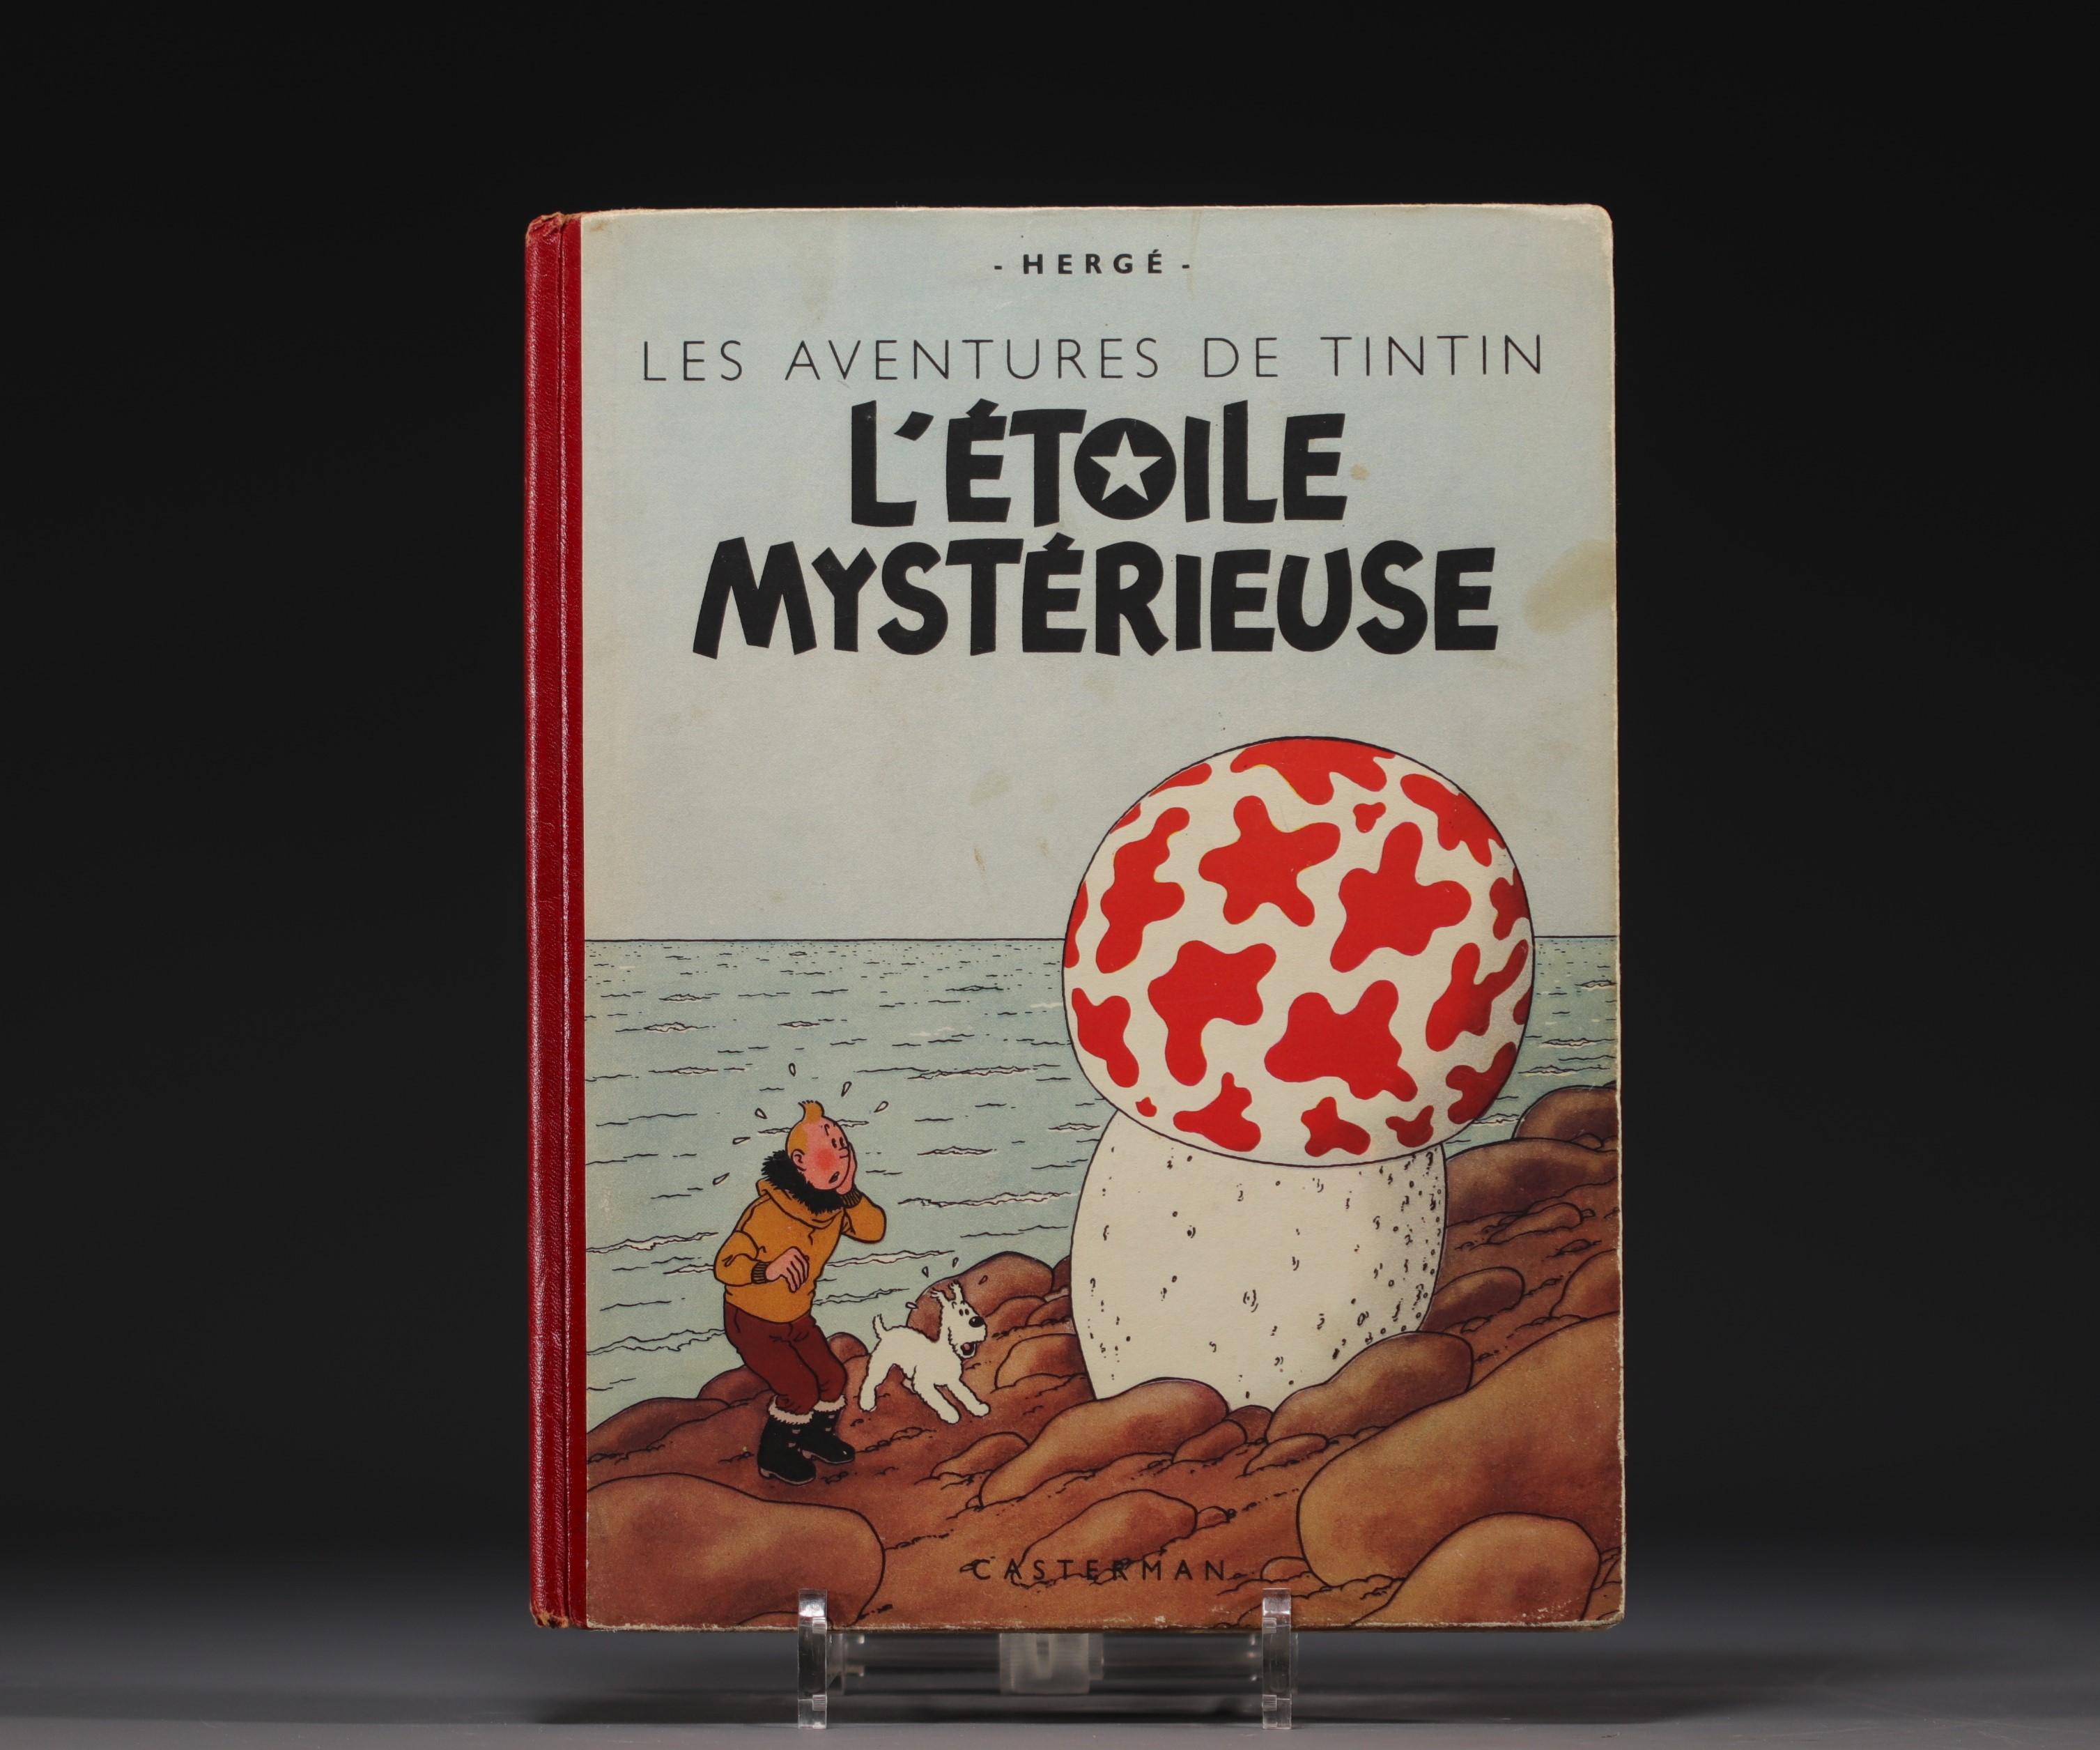 Tintin - "The Mysterious Star" album, 1940 edition.